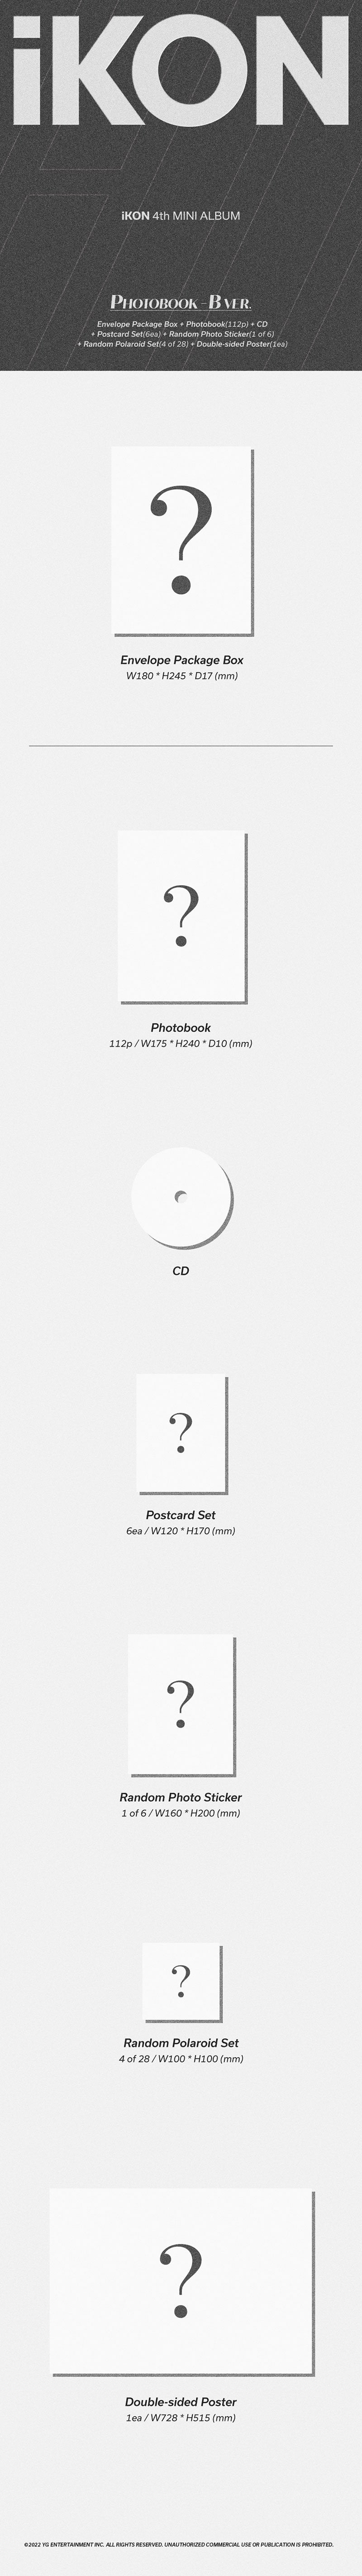 iKON - FLASHBACK (الألبوم الرابع المصغر) Photobook Ver.